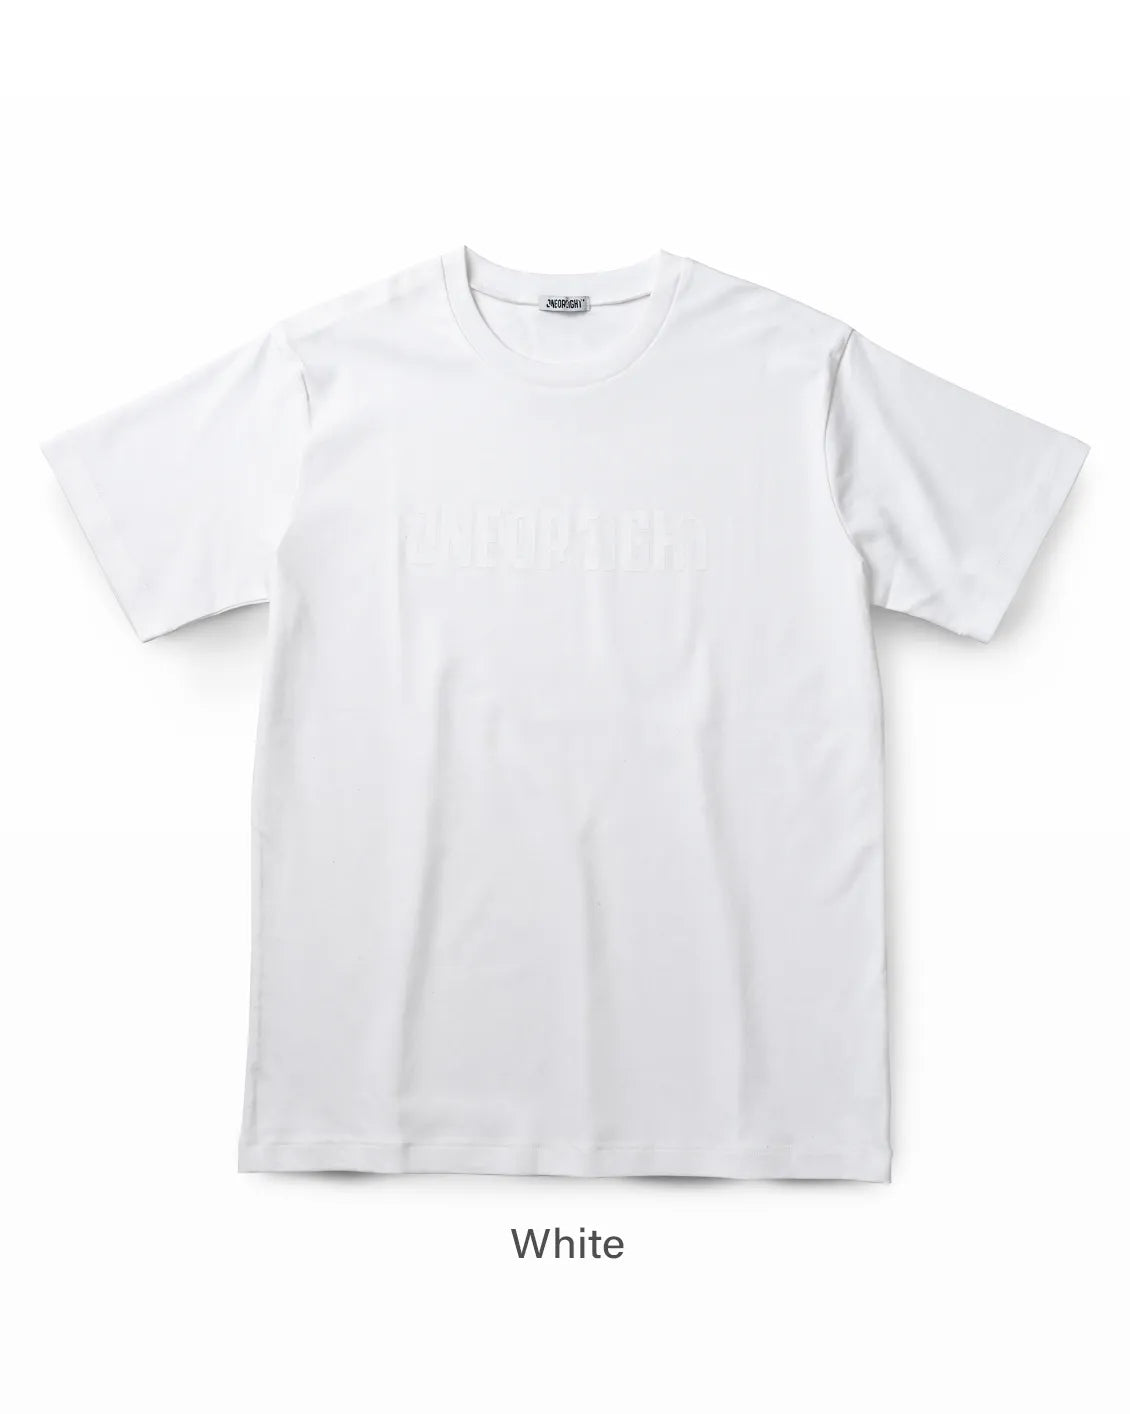 ONEOR EIGHT Tシャツ/Cottonスビンプラチナム/プリント